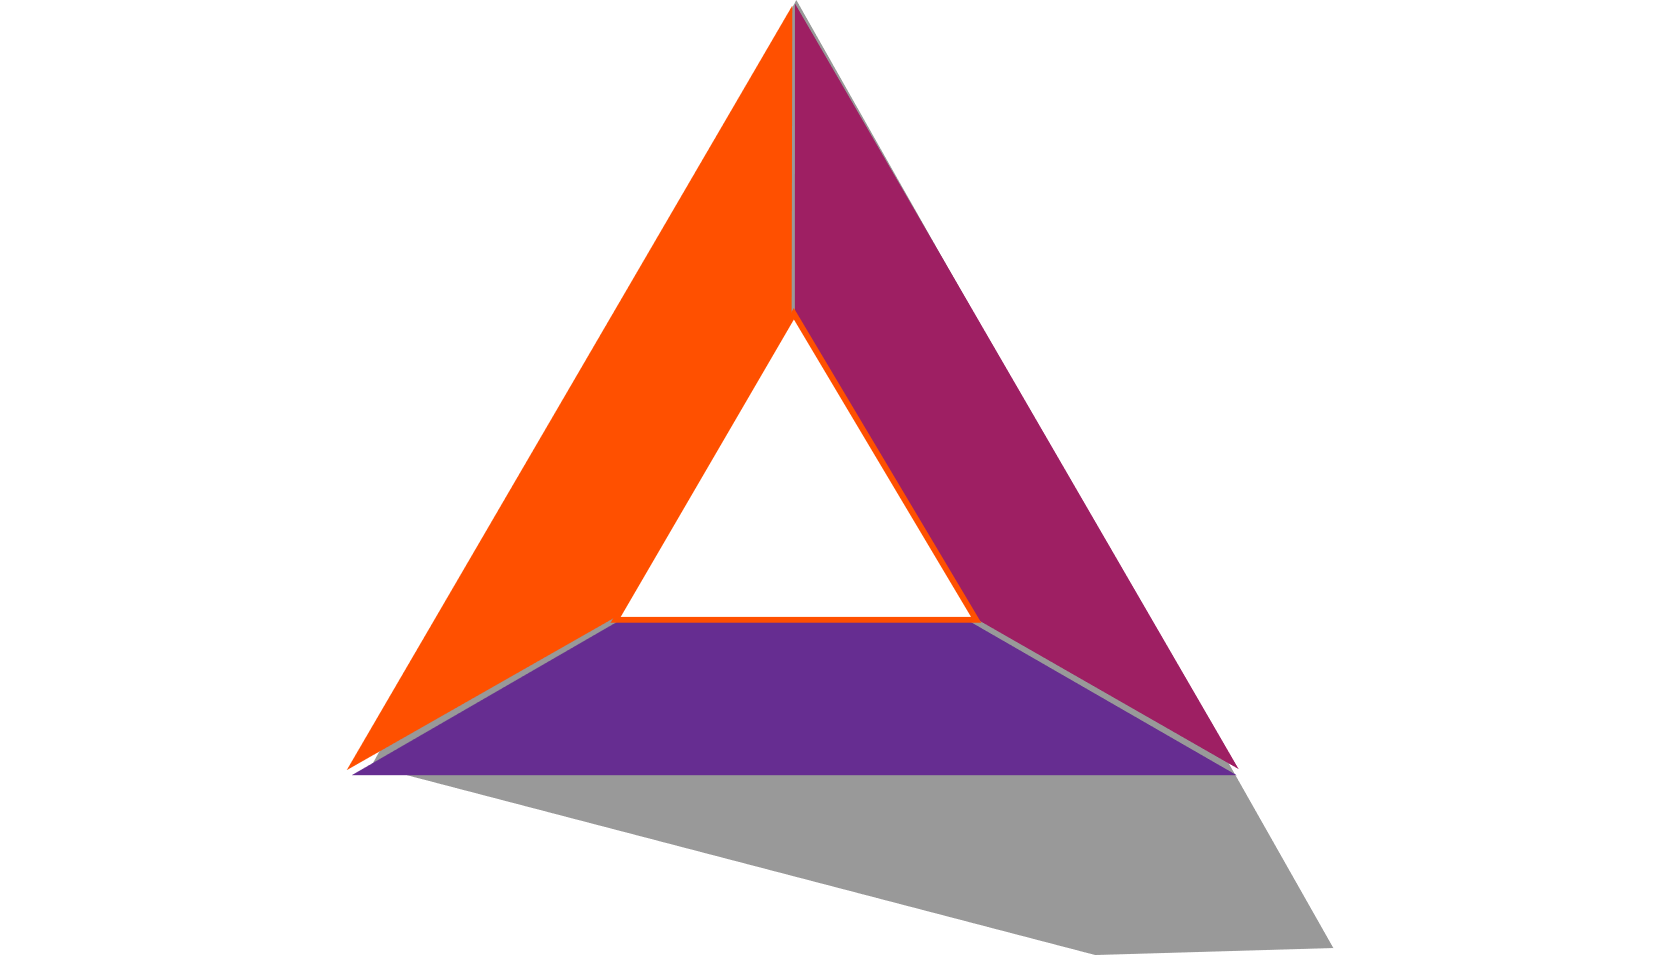 Bat Basic attention token. Basic attention token криптовалюта. Логотип треугольник. Логотип из треугольников. Basic attention